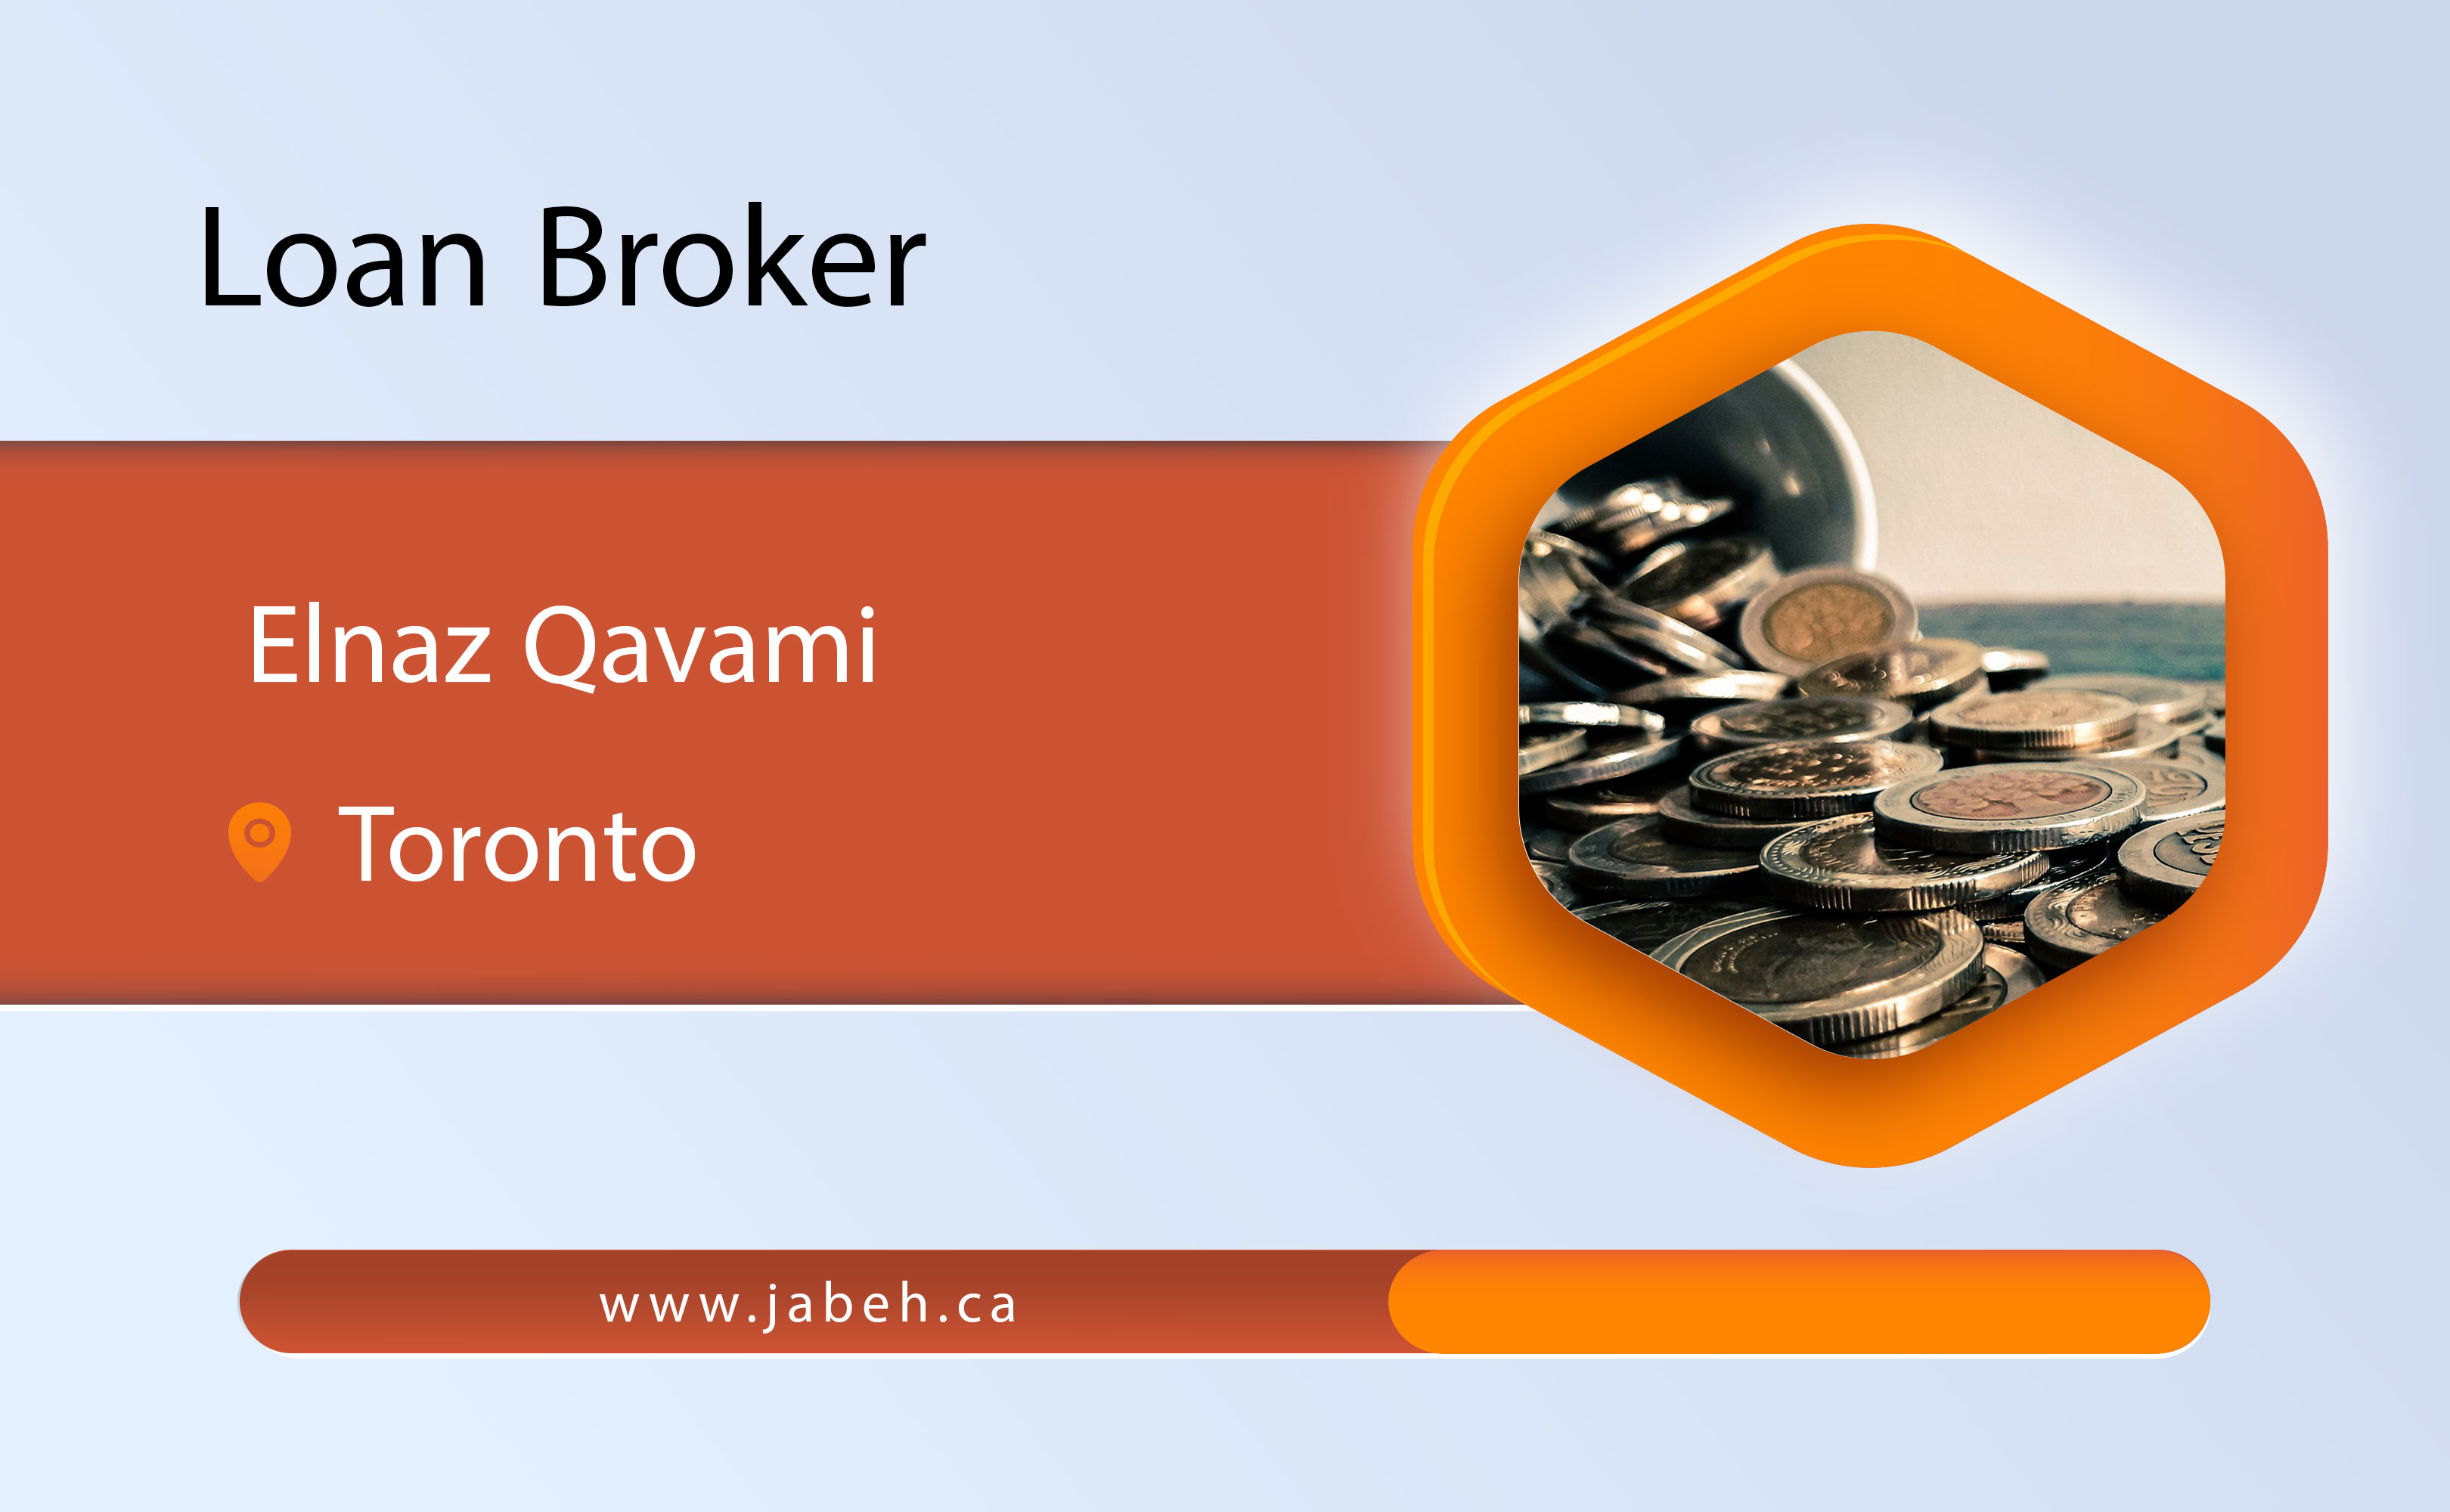 Elnaz Qavami loan broker in Toronto